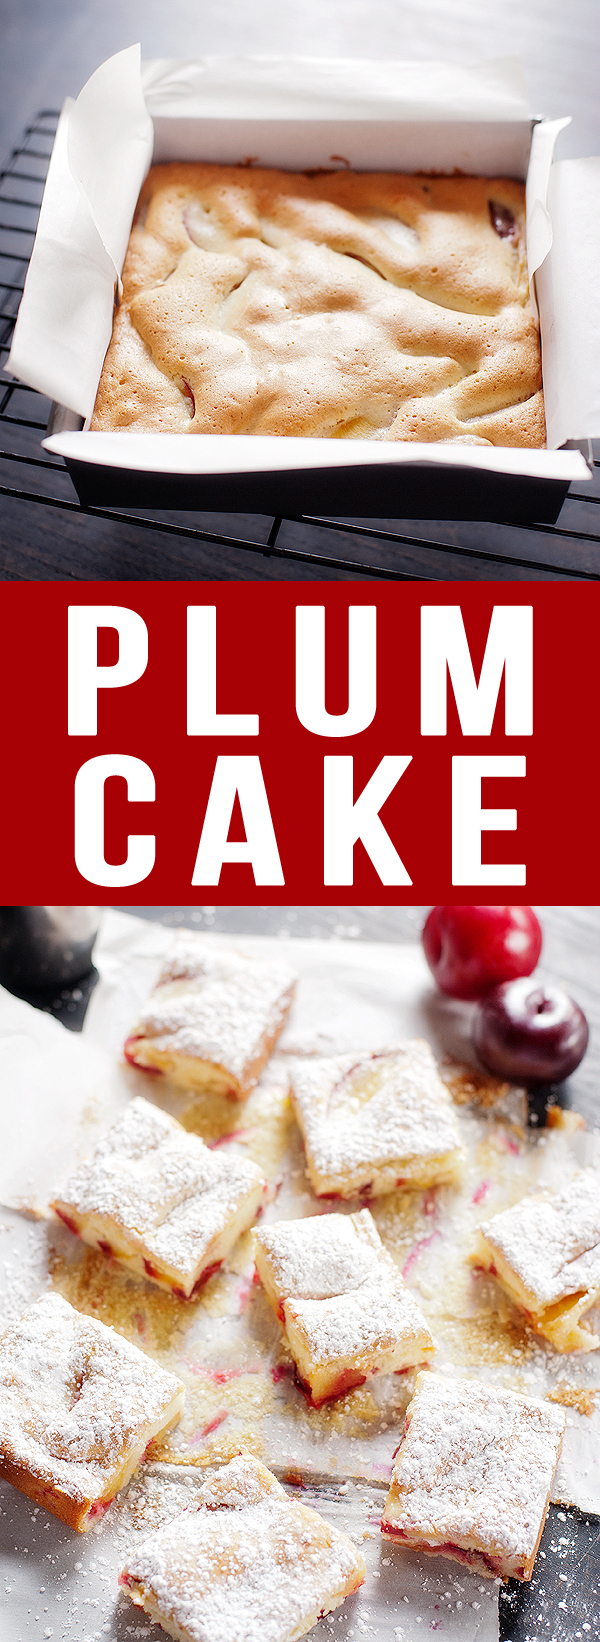 plum cake | pretty plain janes